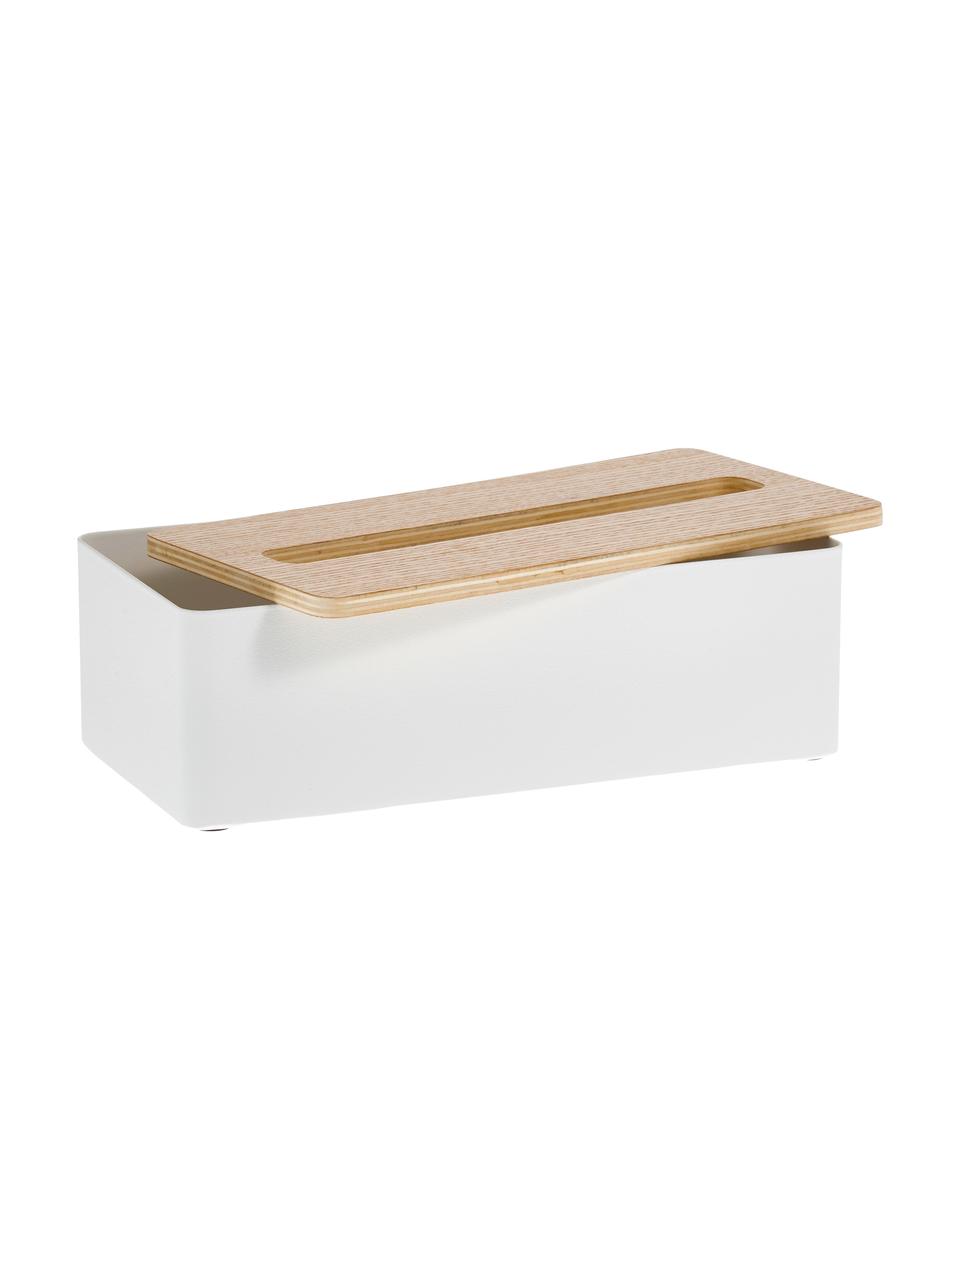 Kosmetiktuchbox Rin, Deckel: Holz, Weiß, Helles Holz, B 26 x T 13 cm